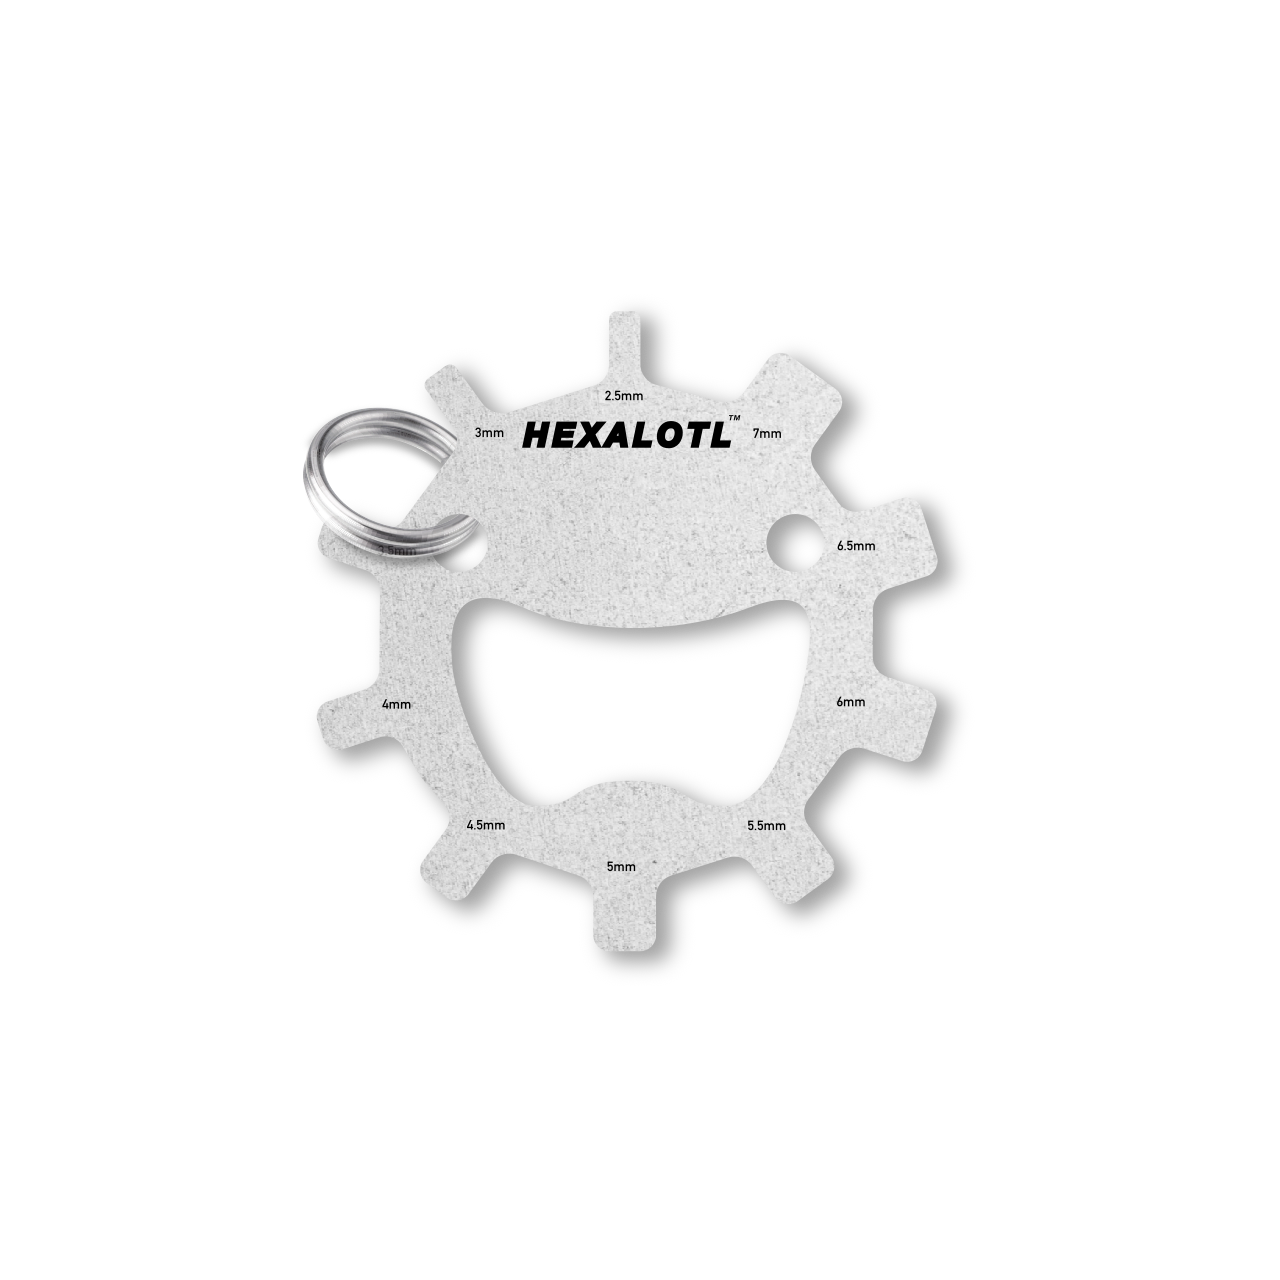 Hexalotl™ 11-in-1 Hex-Key Set: US Standard